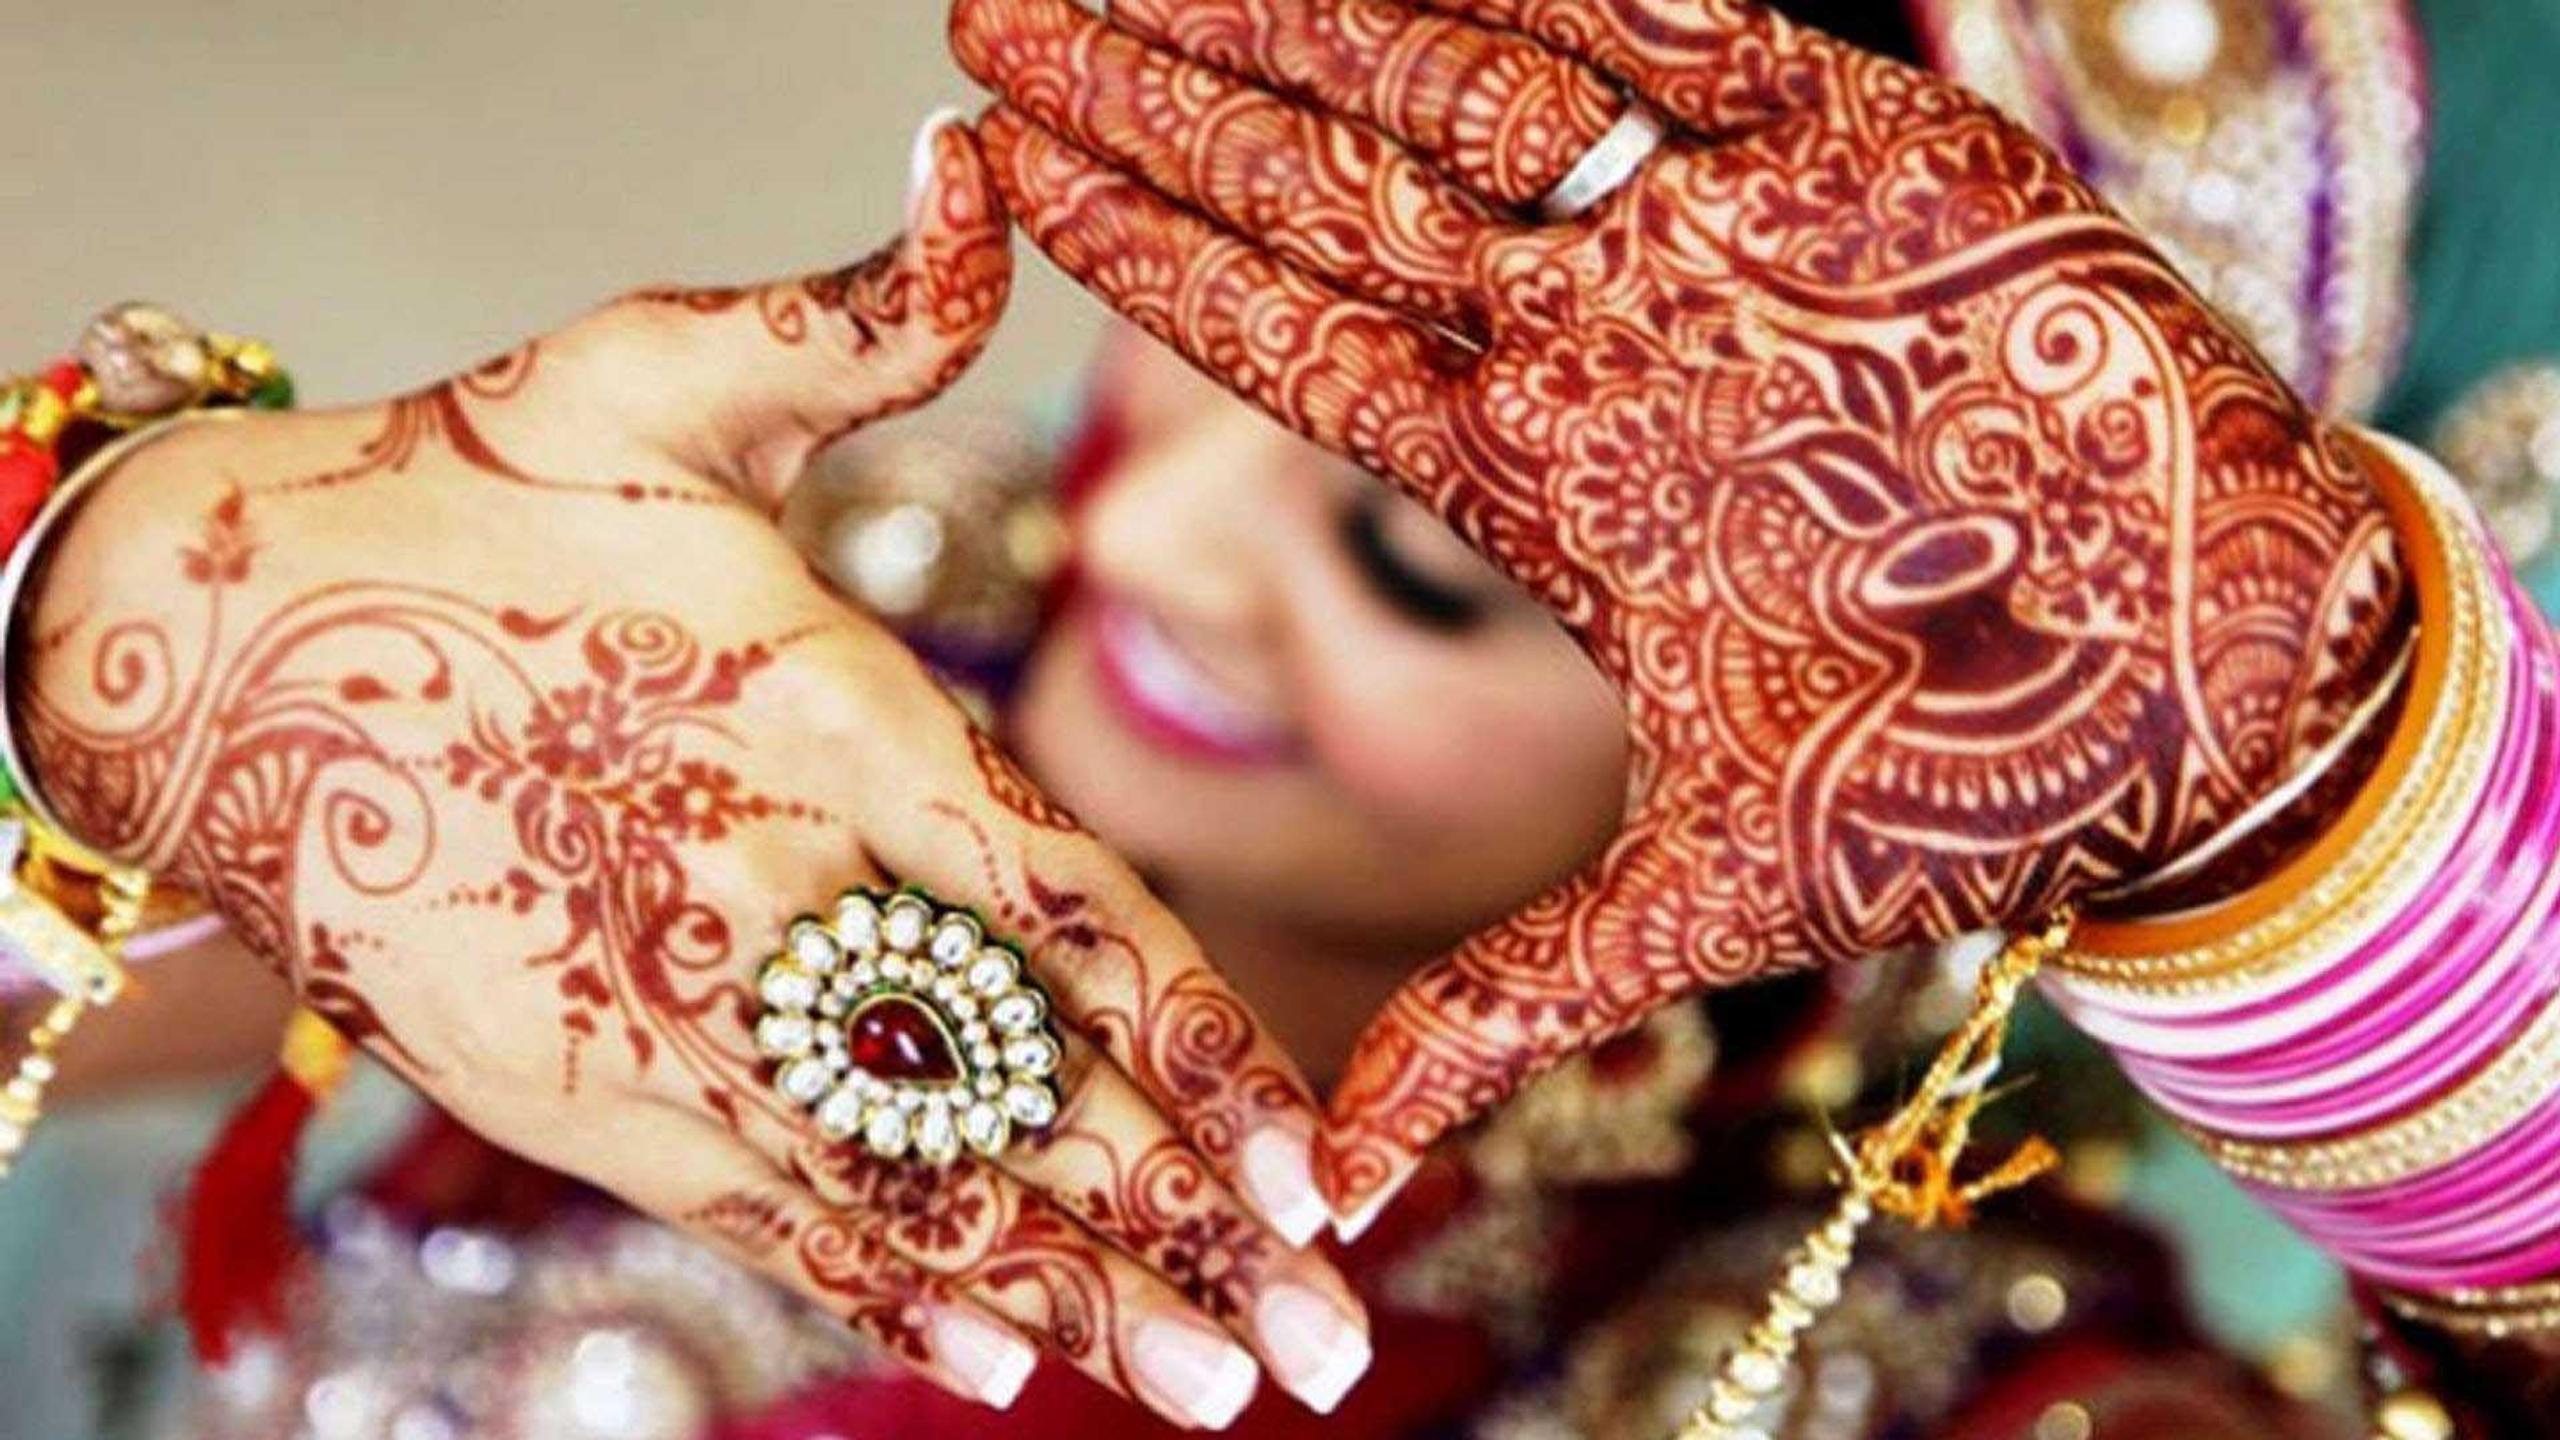 Mehndi art on body - Indian Henna wedding style